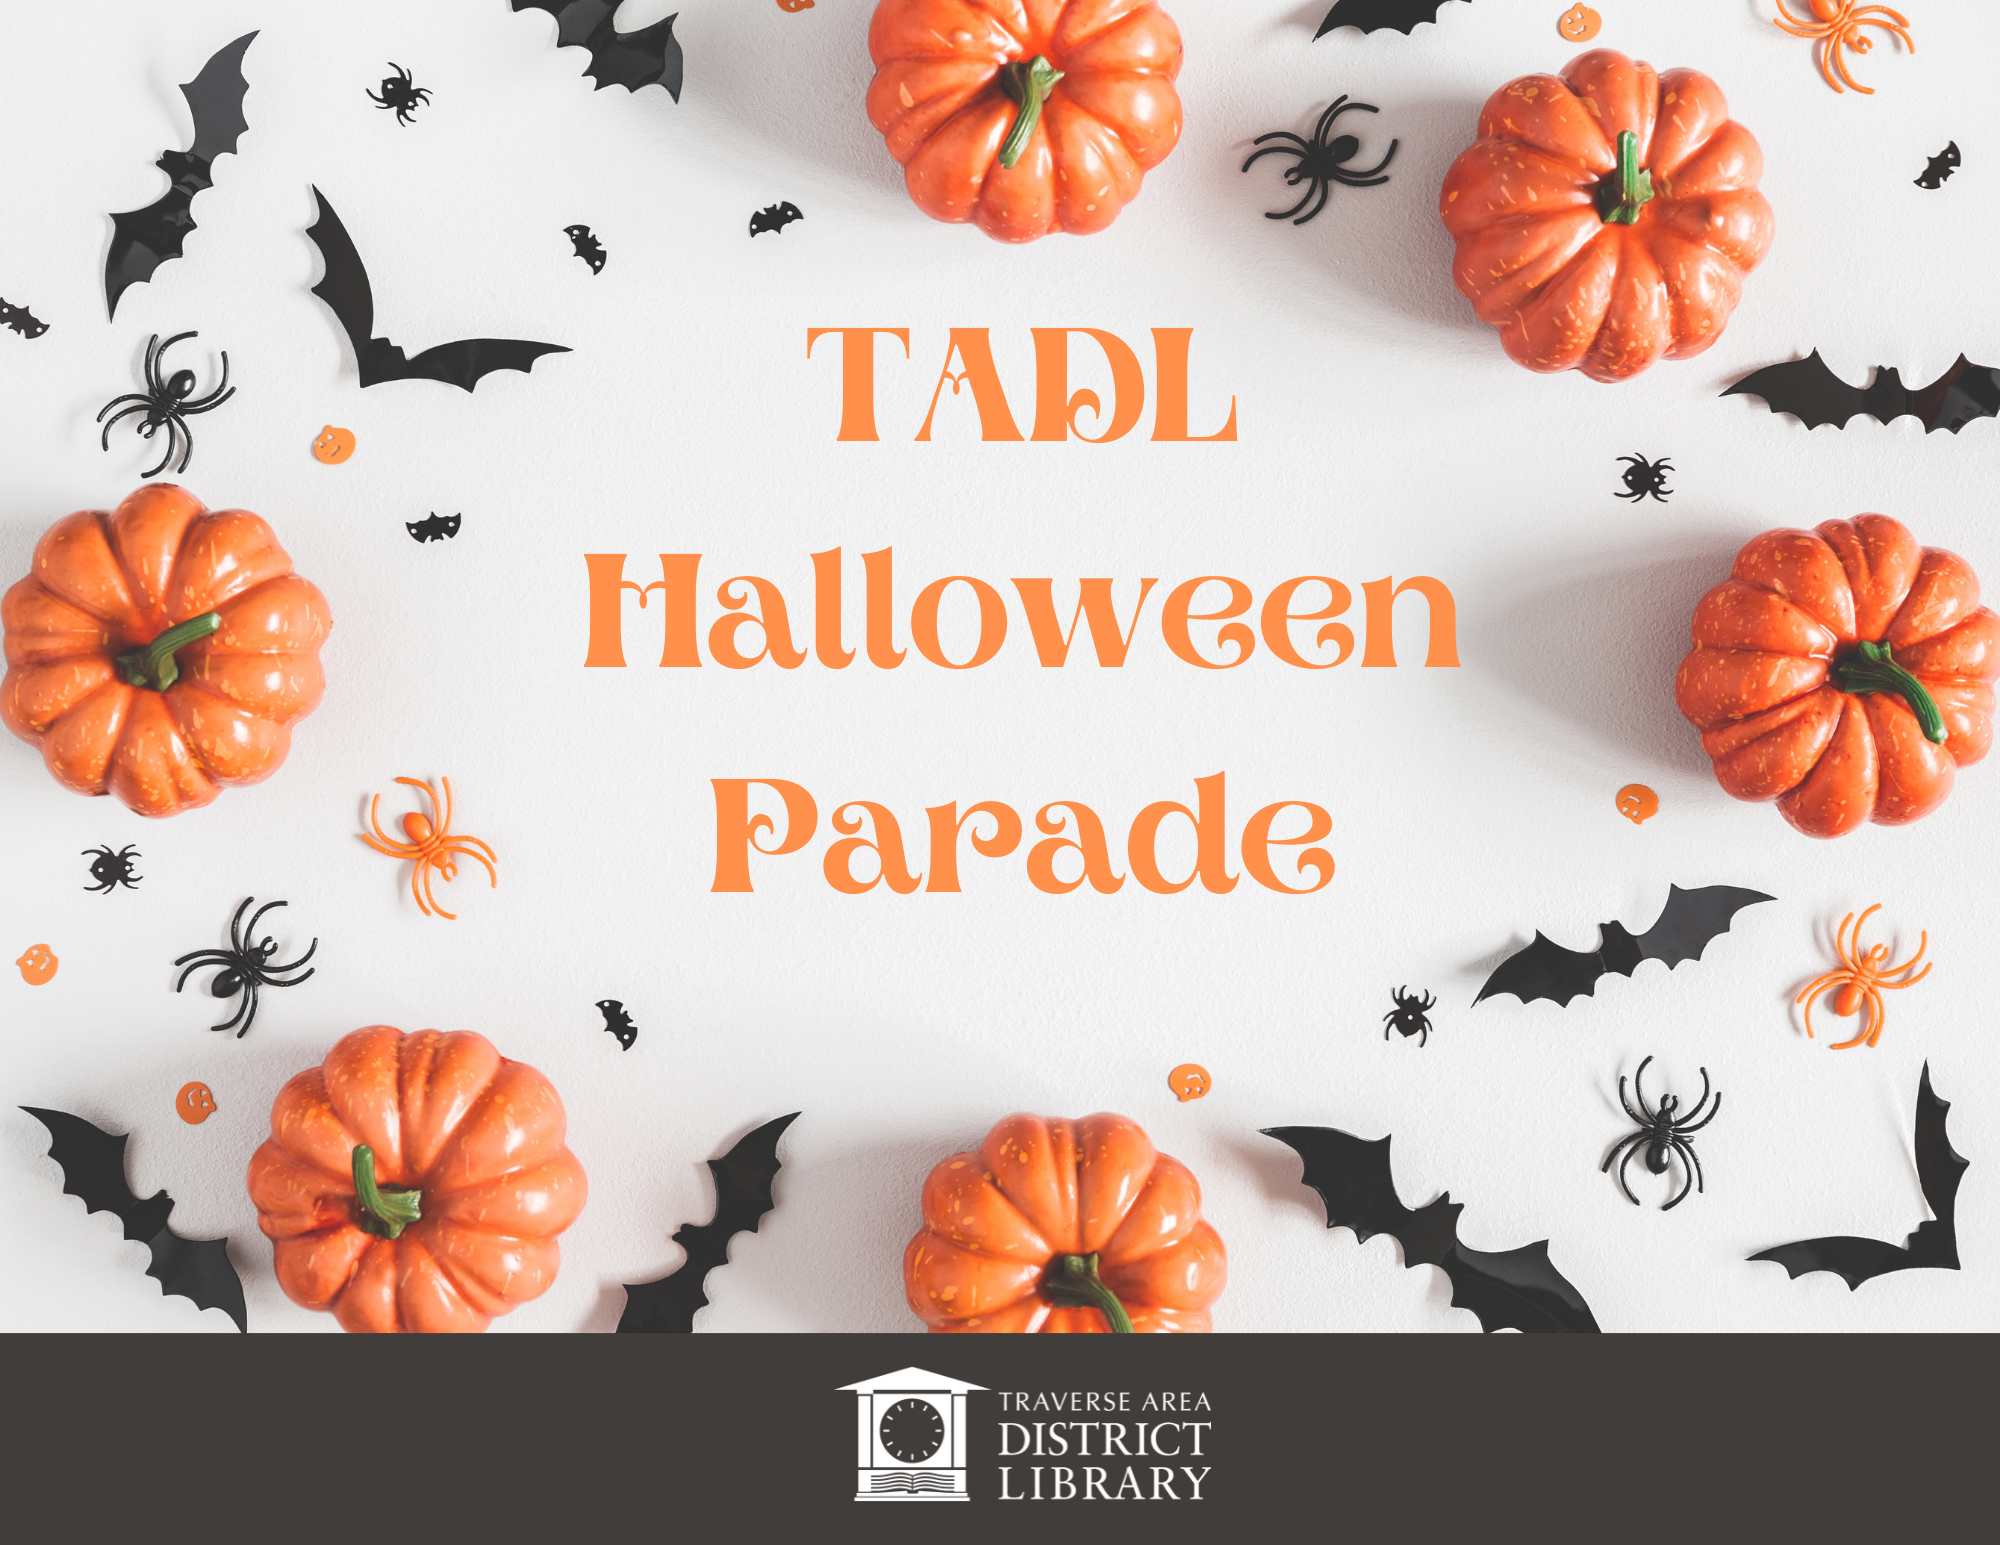 TADL Halloween Parade